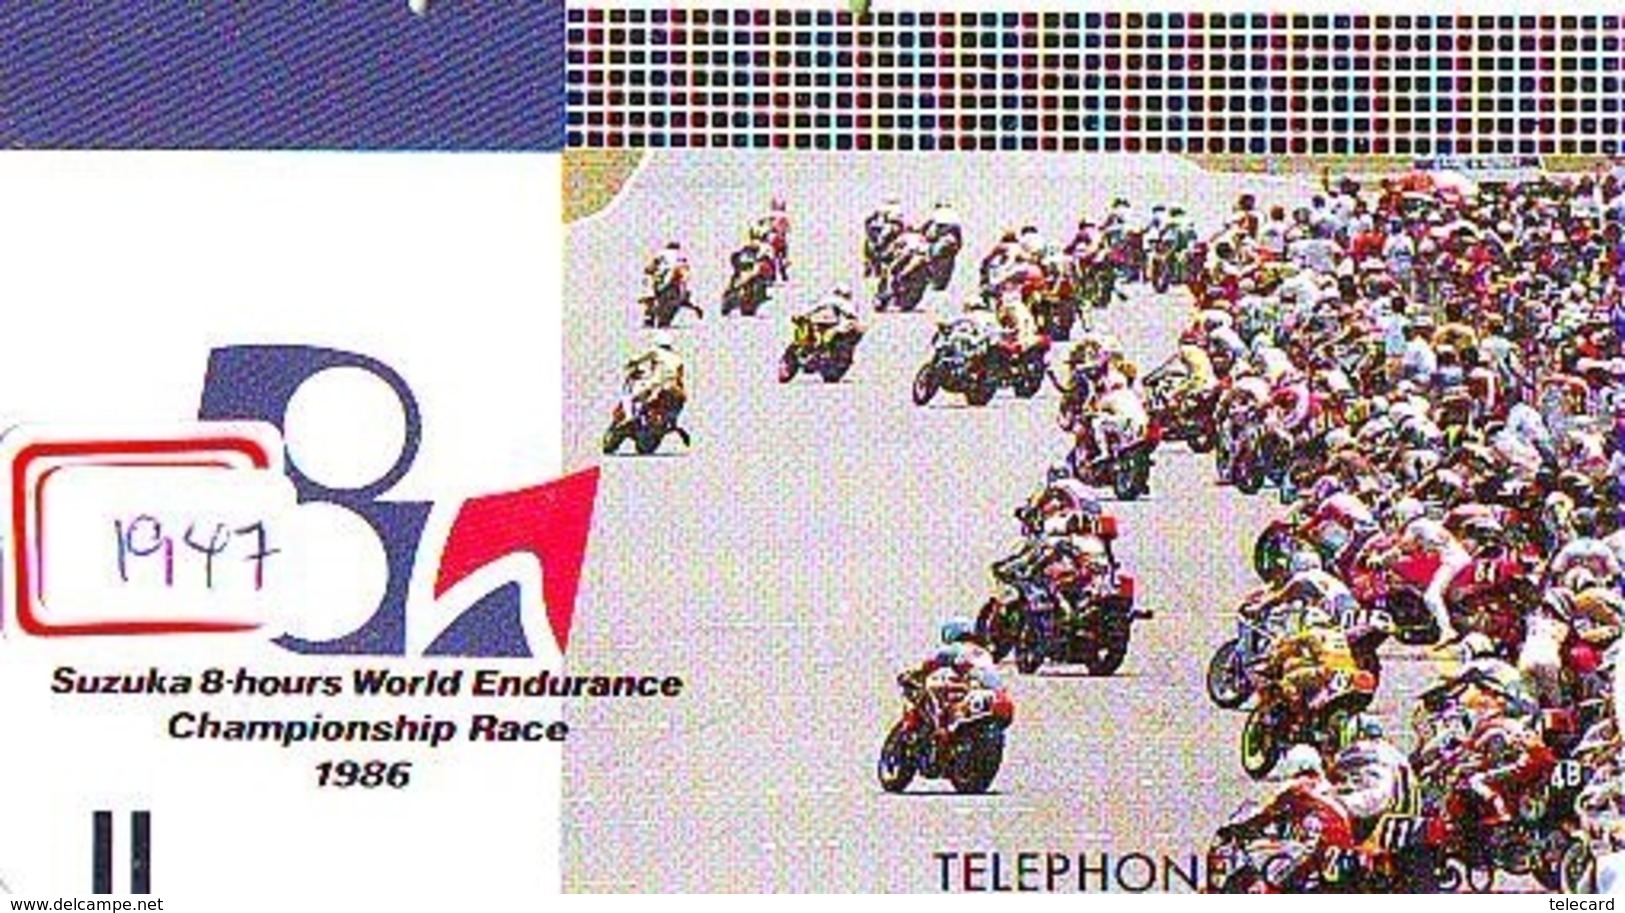 Télécarte Japon * FRONT BAR * 330-2228 * GRAND PRIX 1986 * SUZUKA 8-HOURS * MOTO  (1947) MOTORBIKE * PHONECARD JAPAN - Motorräder